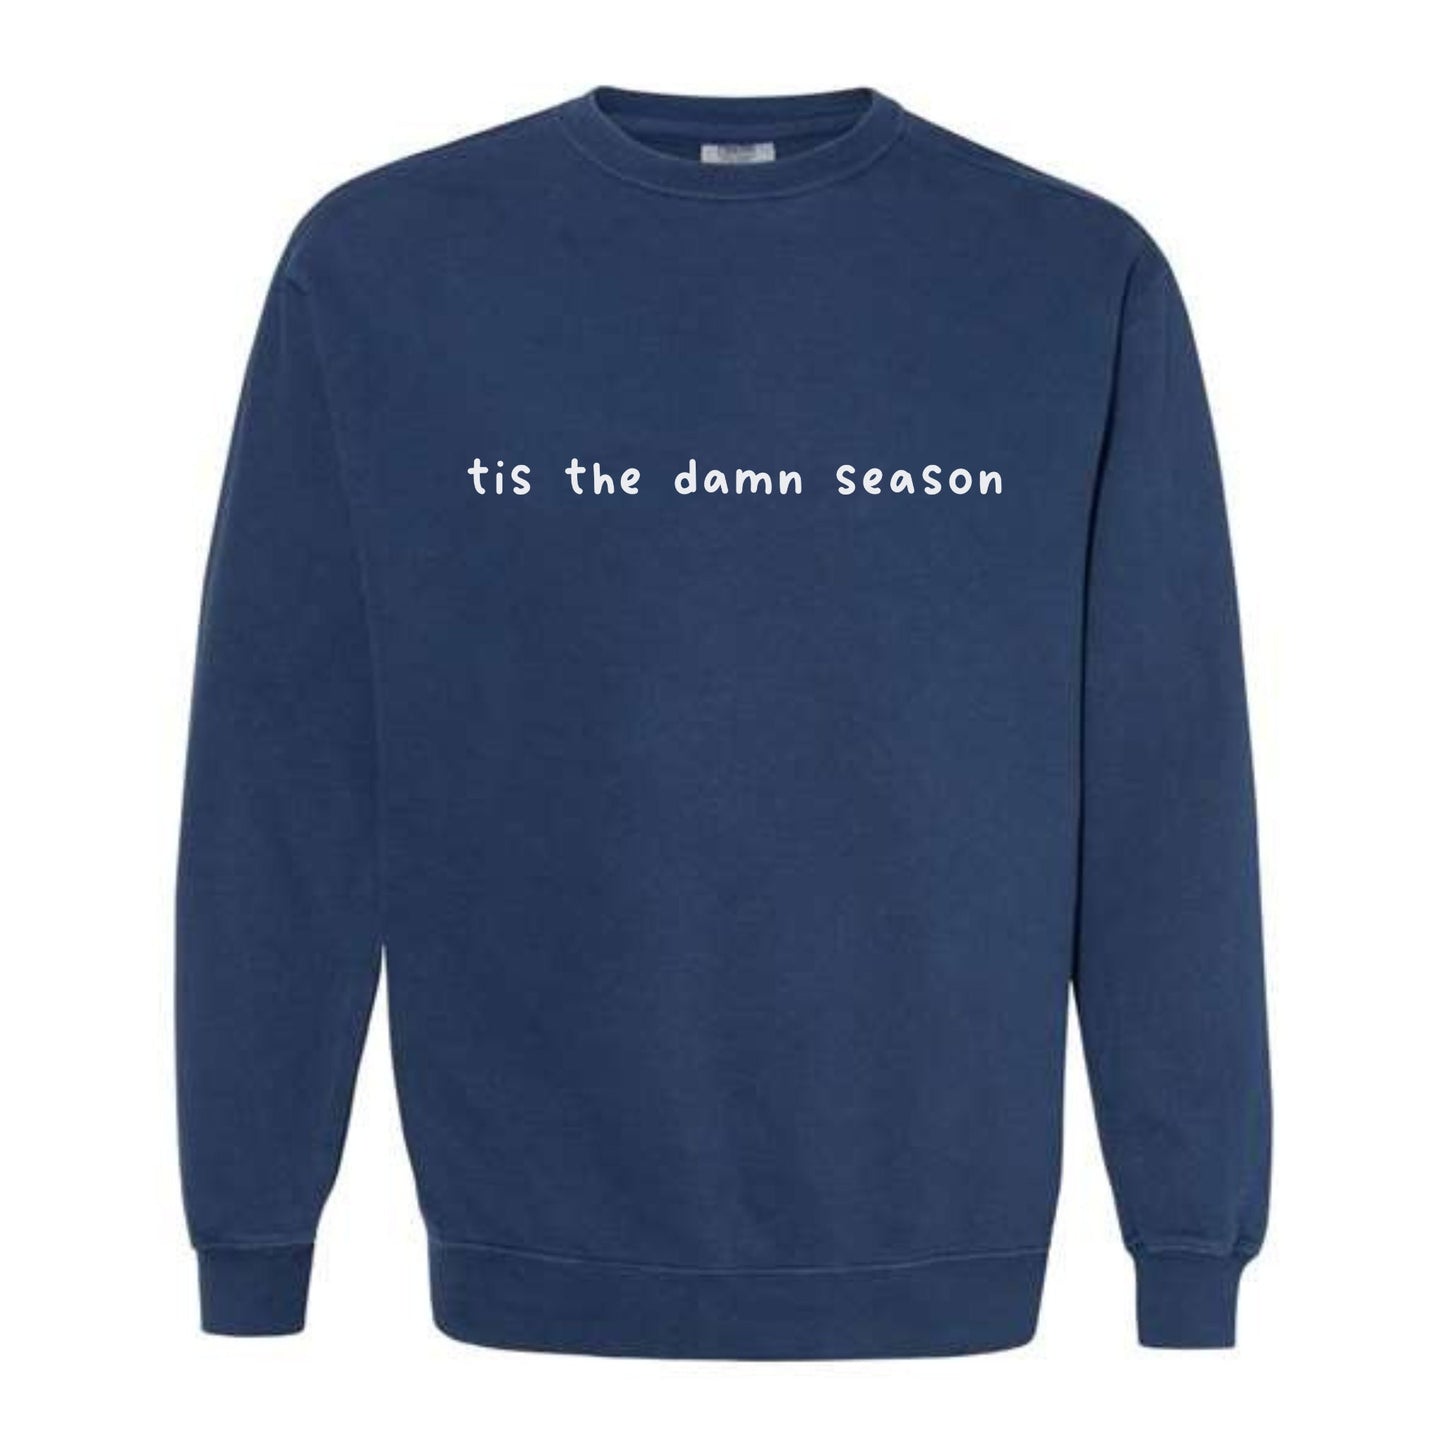 tis the damn season Crewneck Sweatshirt